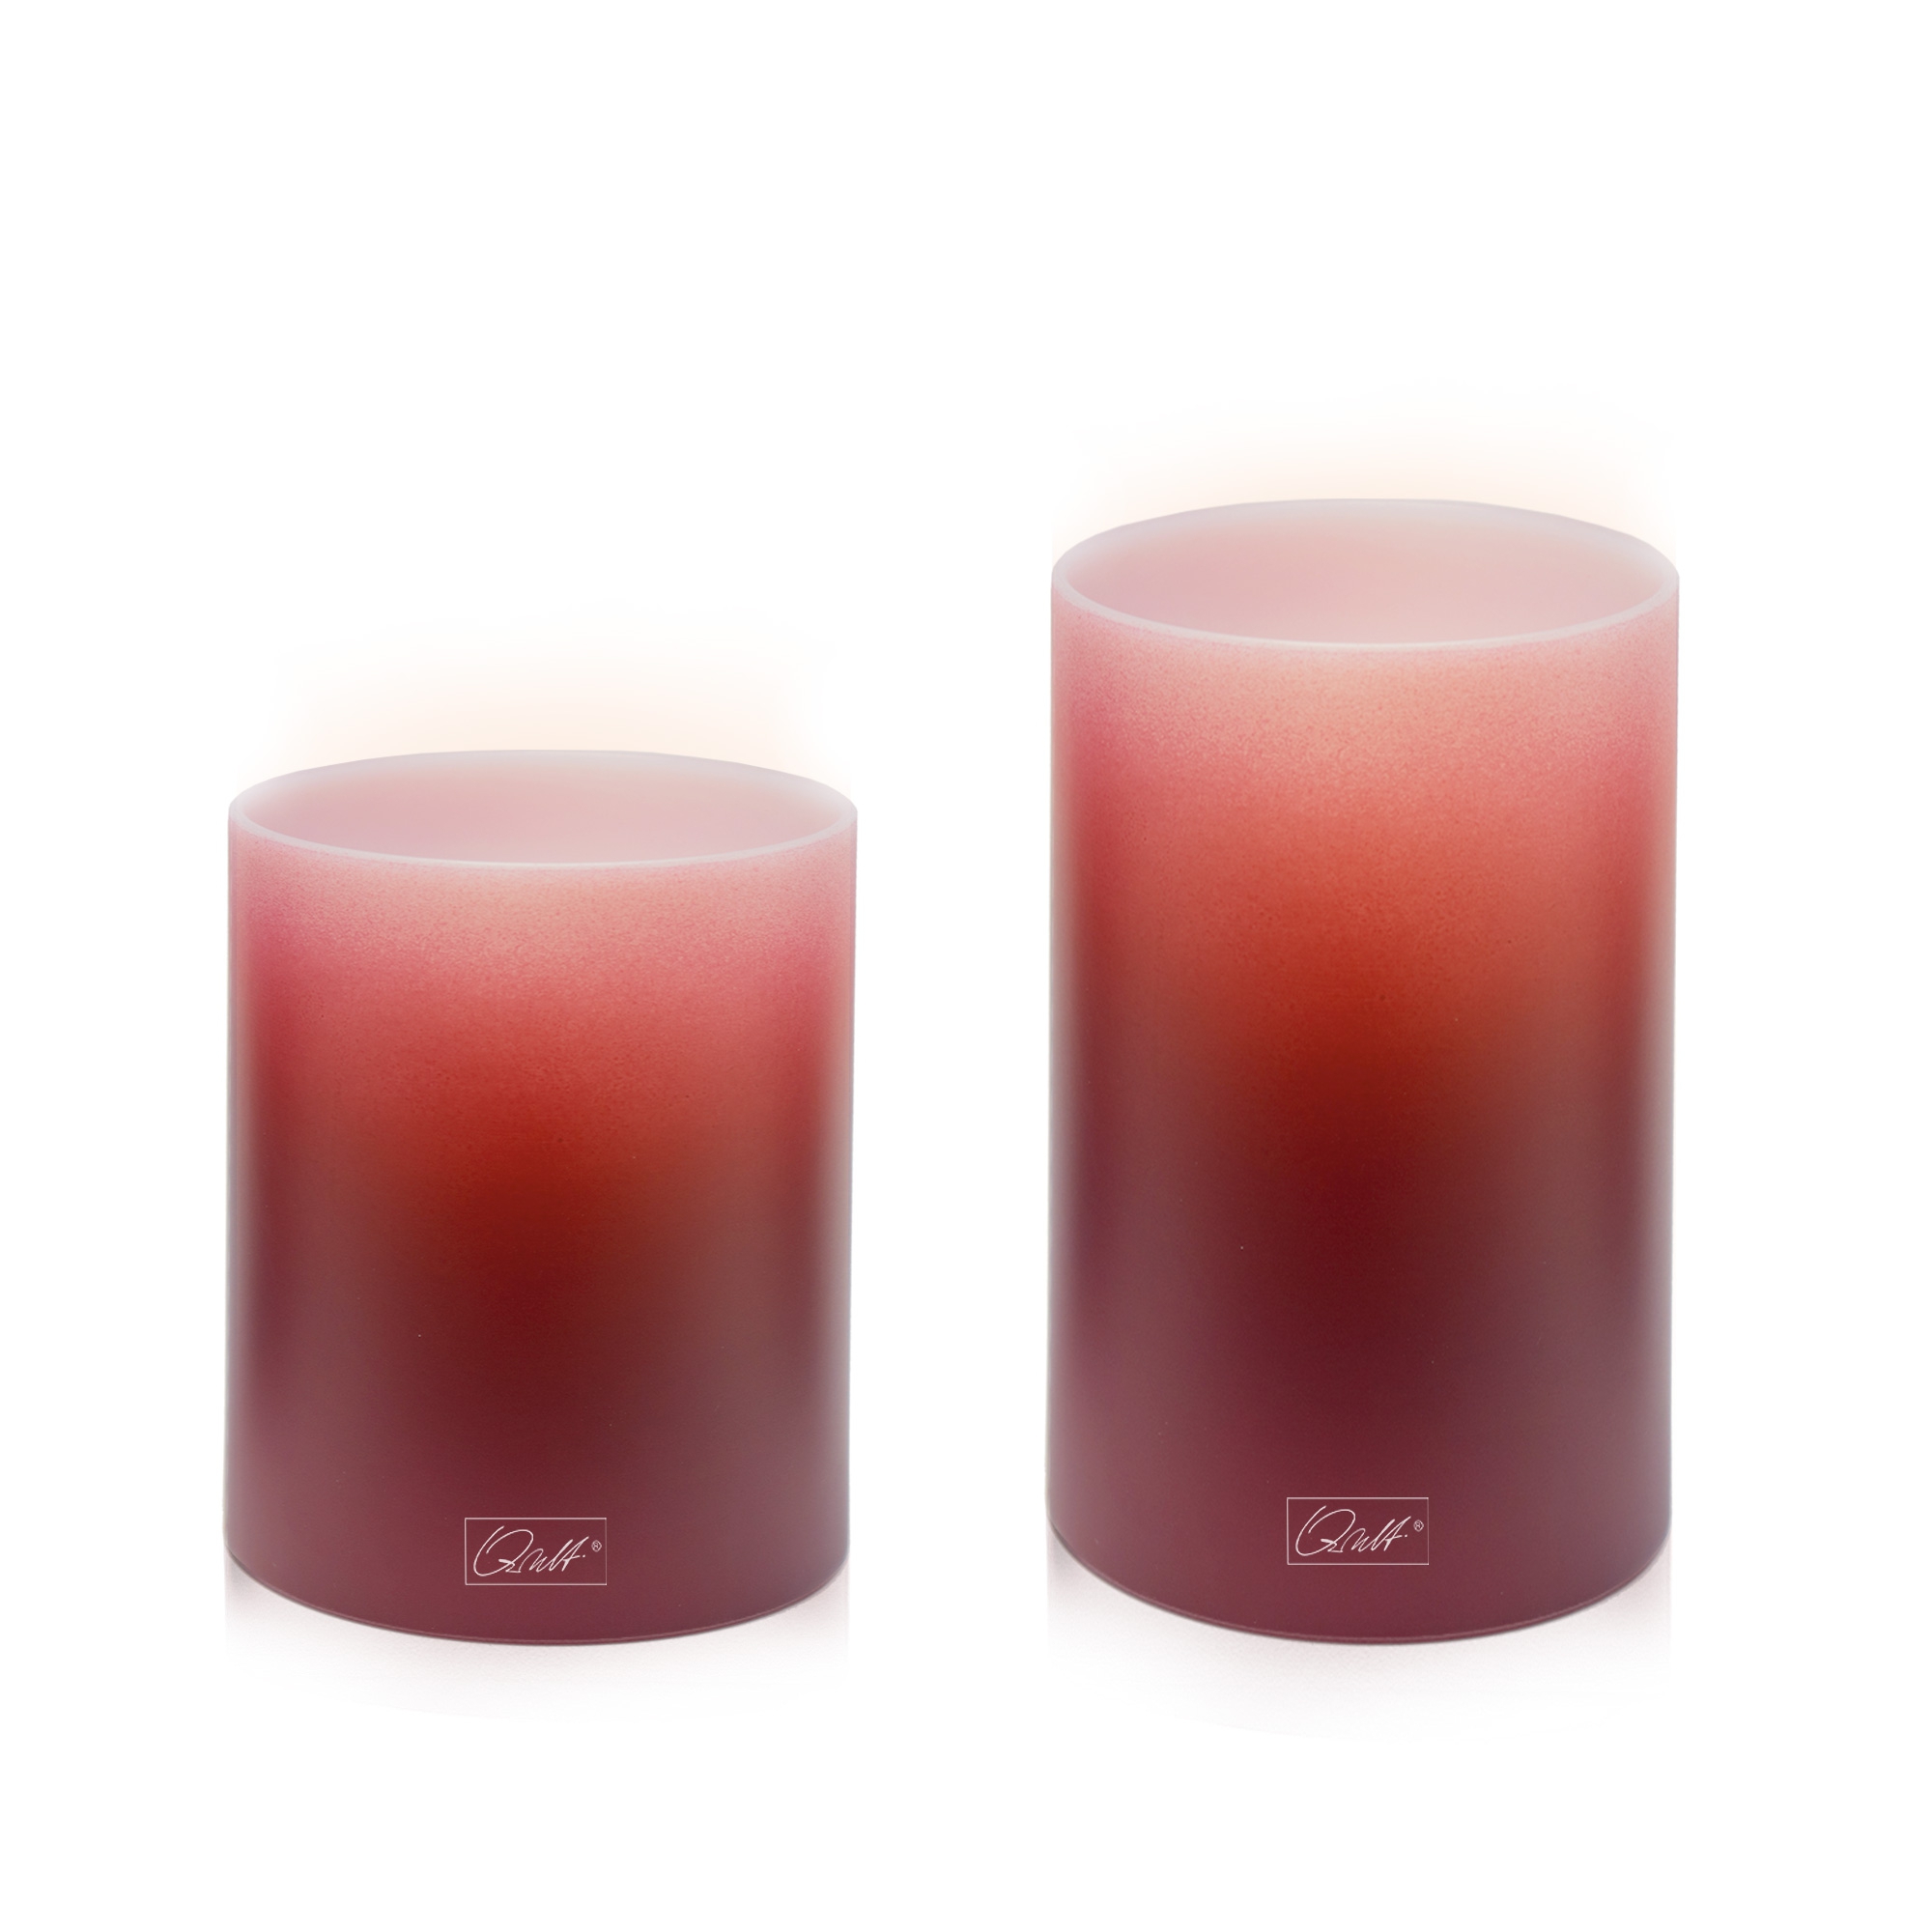 Qult Farluce Inside - Tealight Candle Holder Ø 8 x H 9 cm - Merlot Red